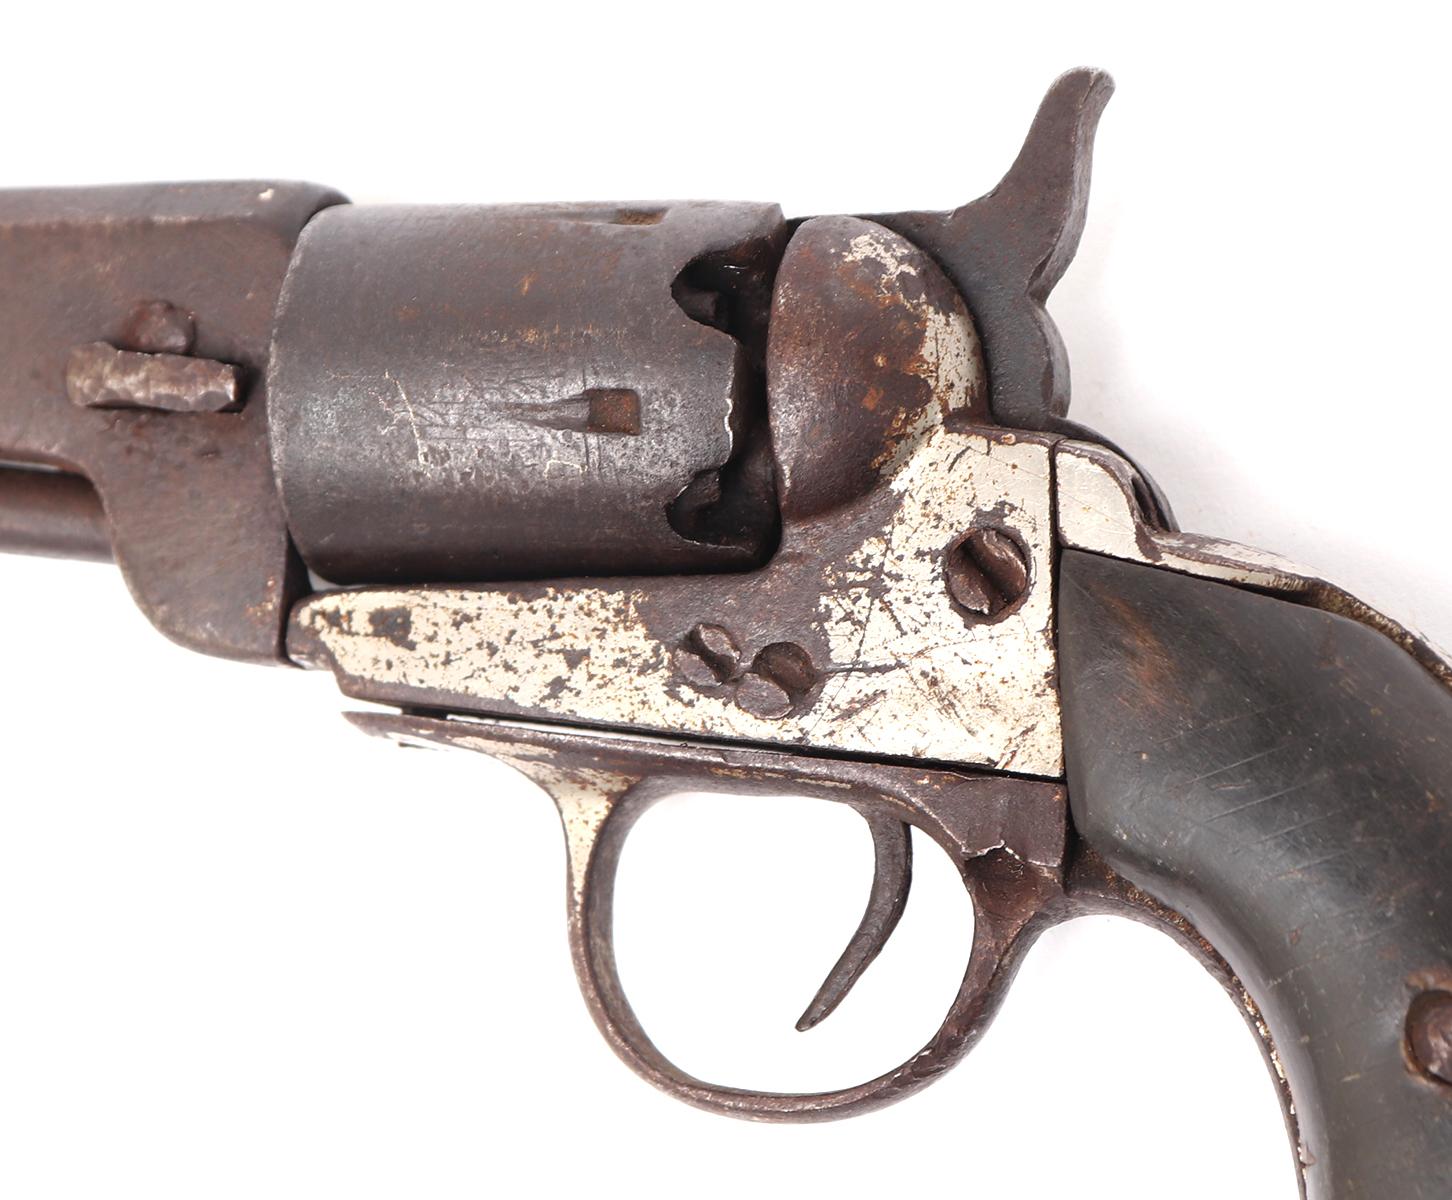 Antique Mexican Colt Revolver Pistol